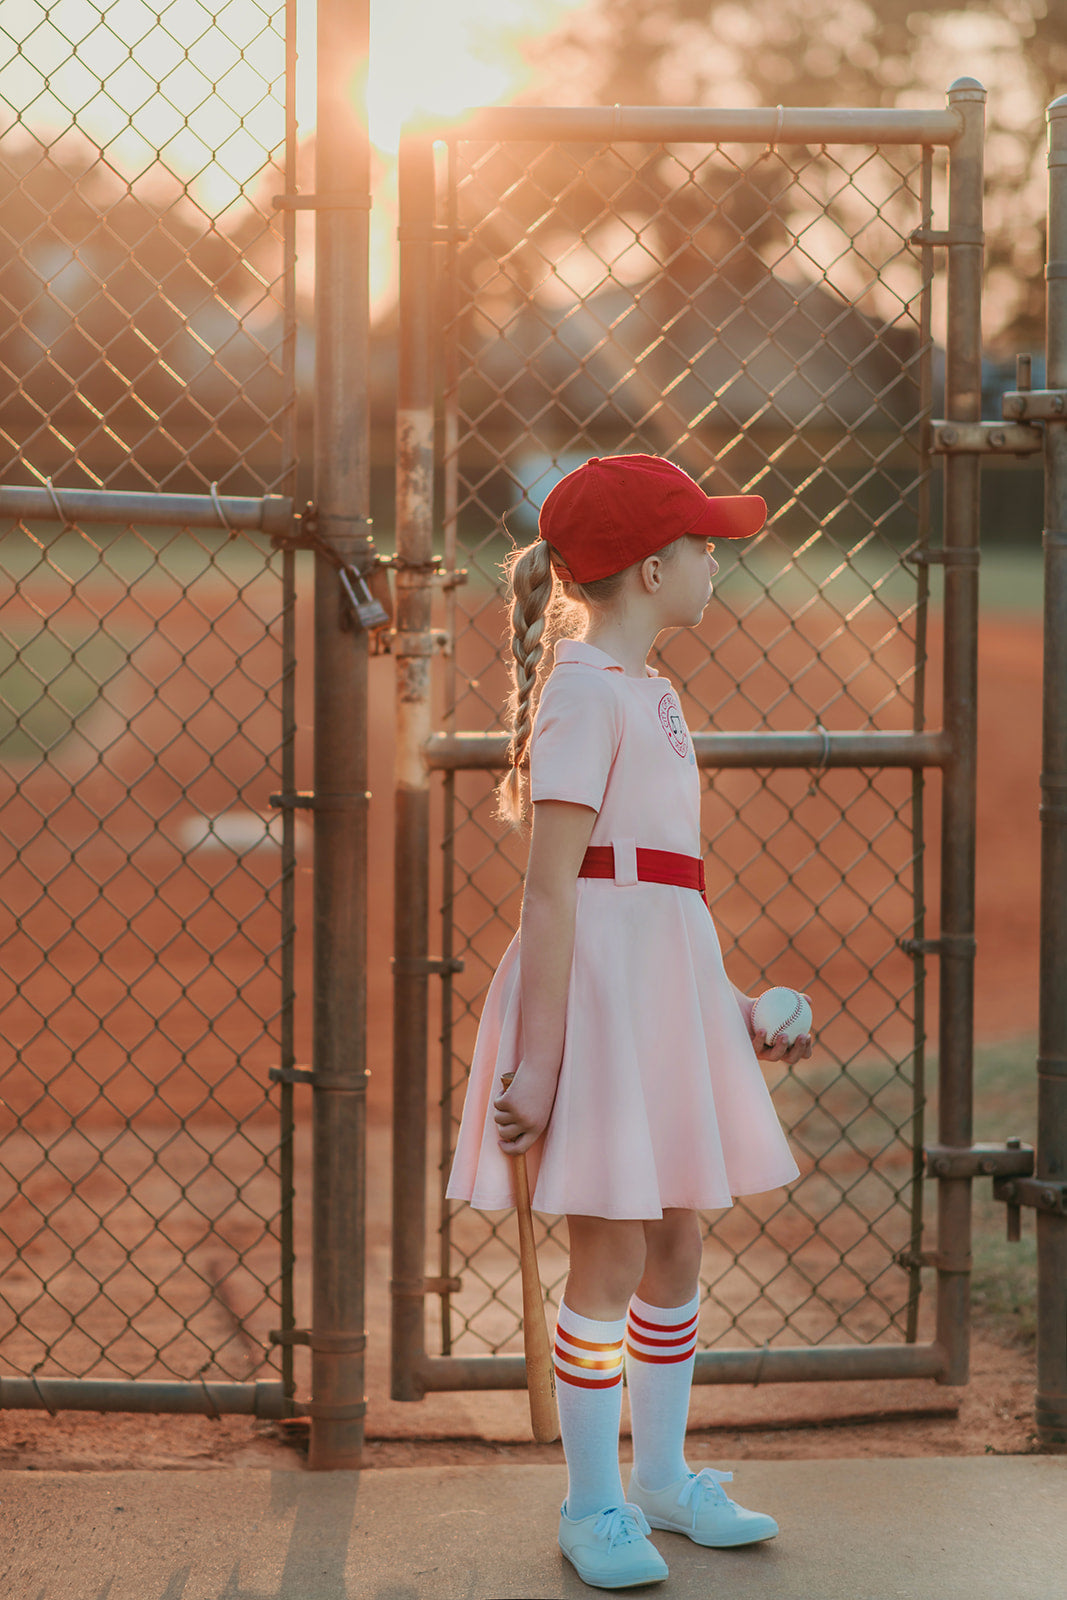 Baseball Costumes - Baseball Uniforms